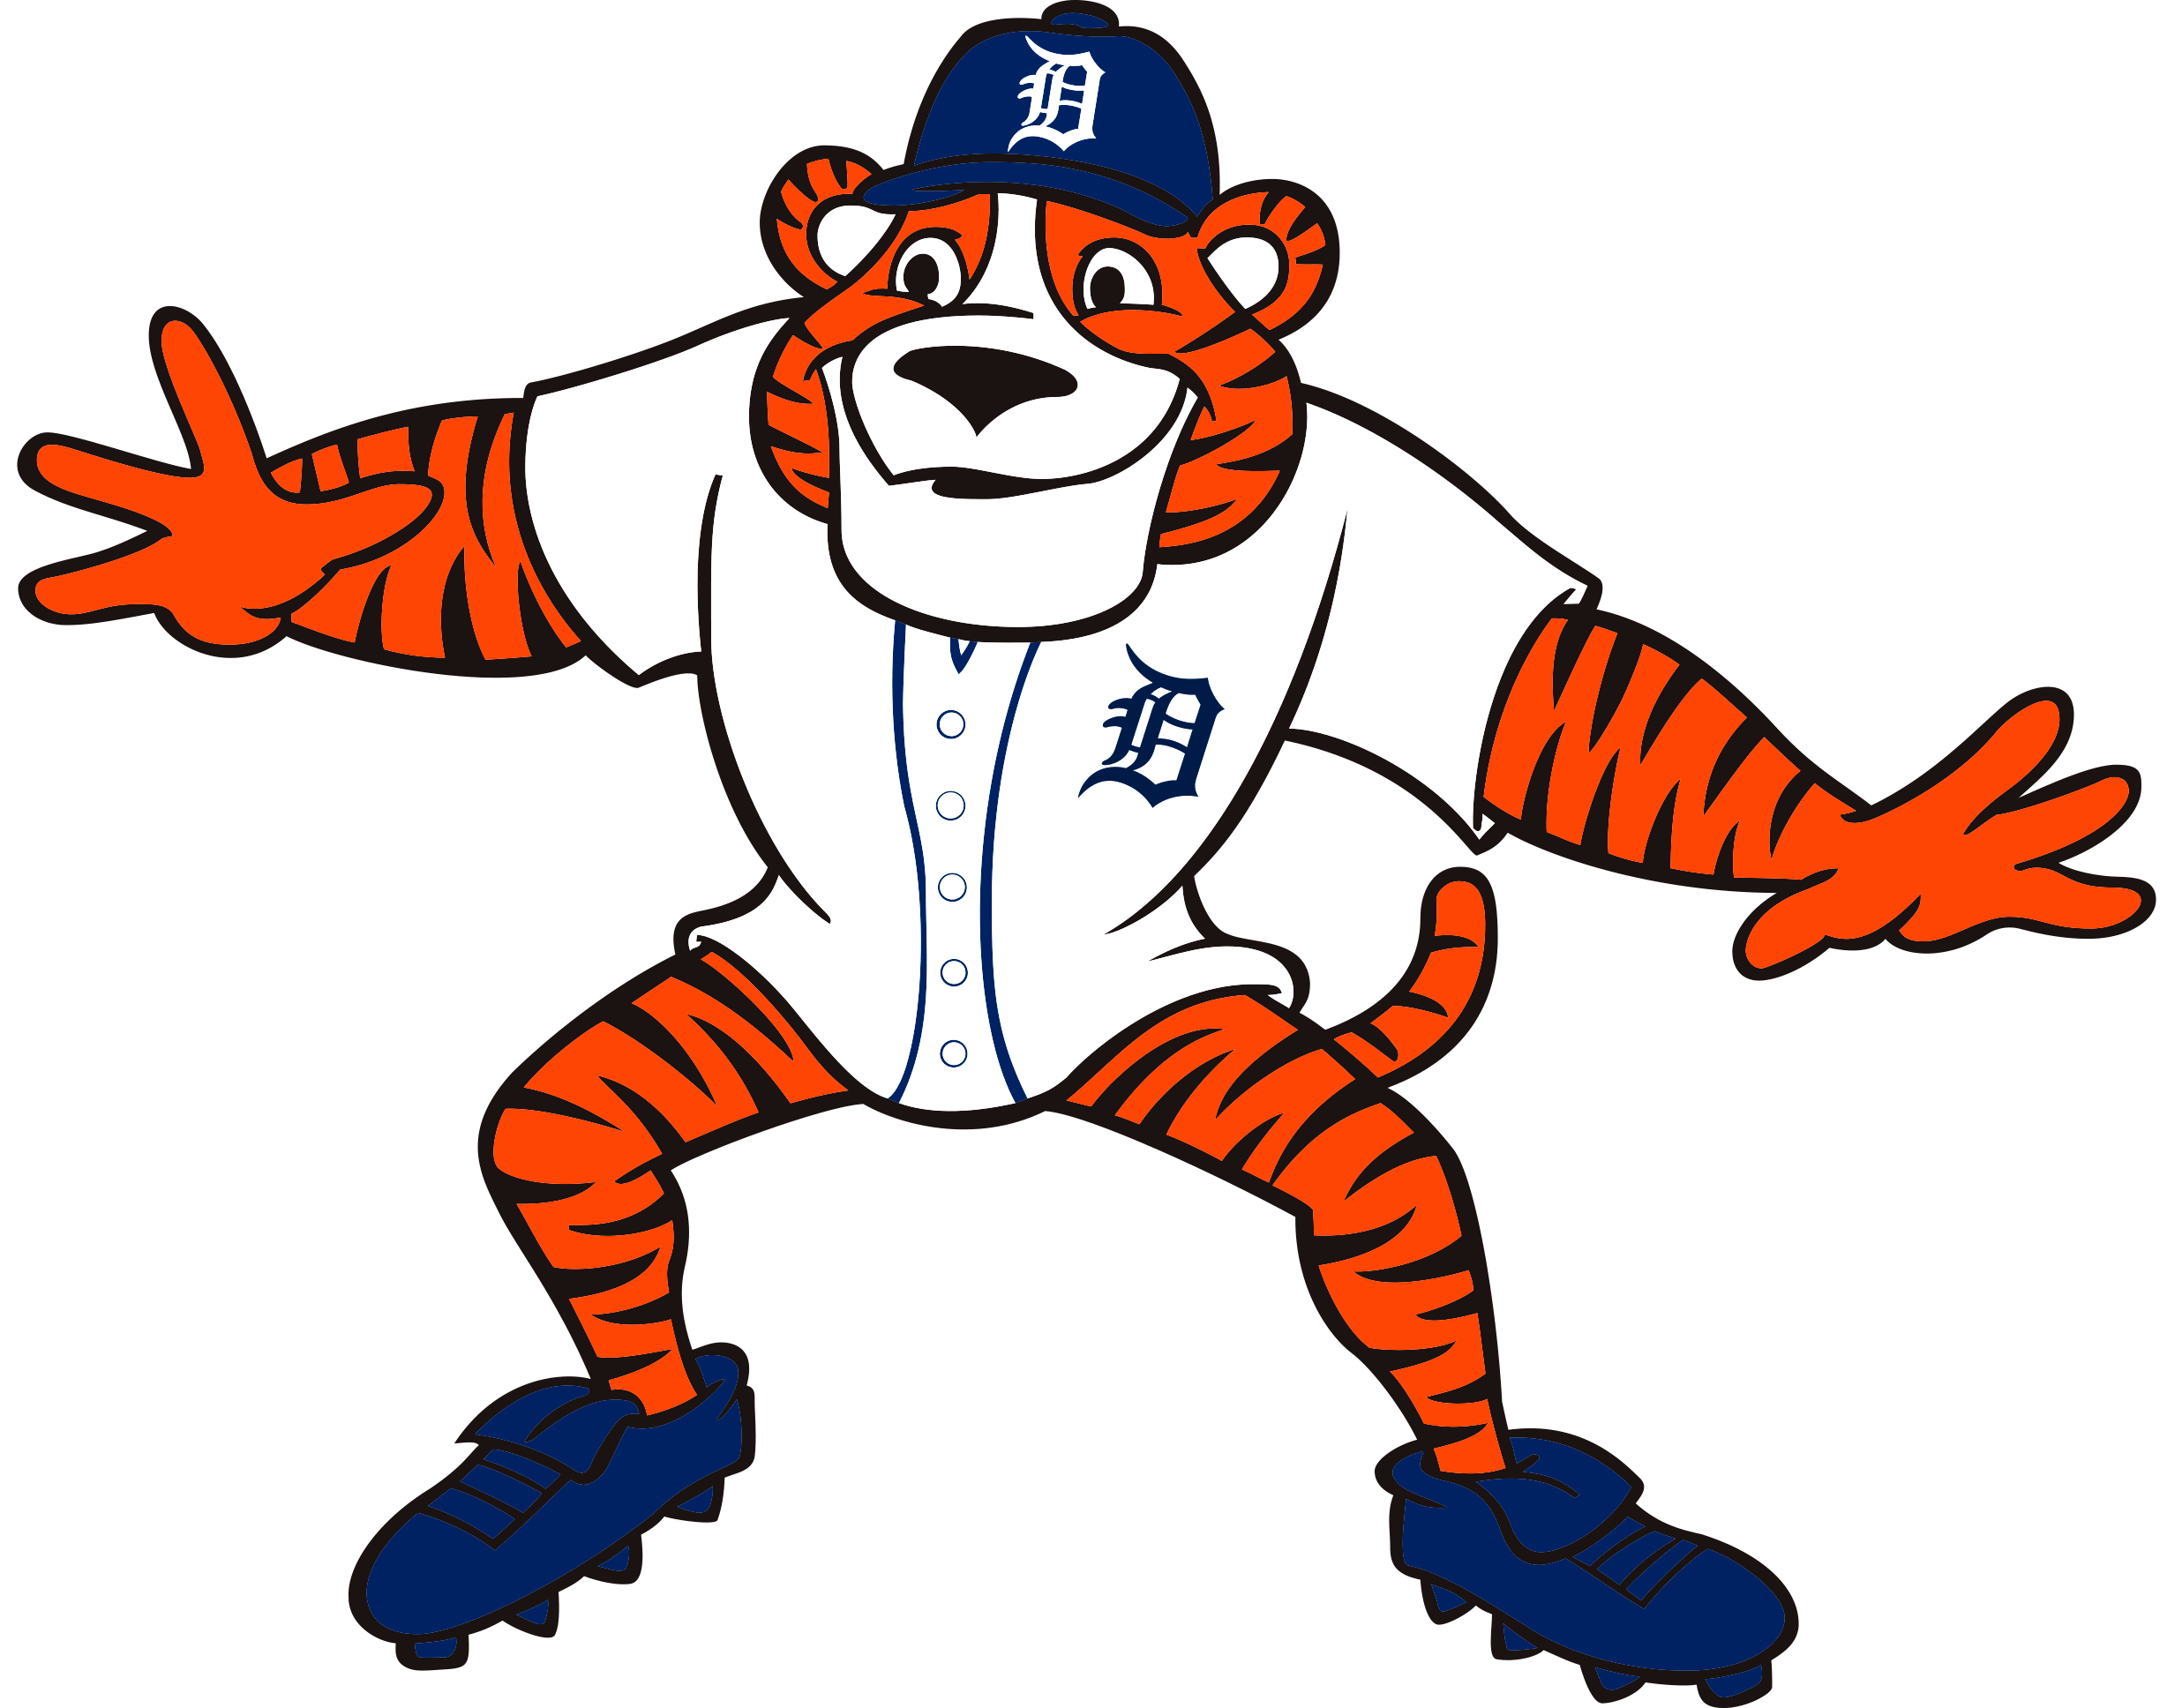 12 Styles MLB Detroit Tigers Svg, Detroit Tigers Svg, Detroit